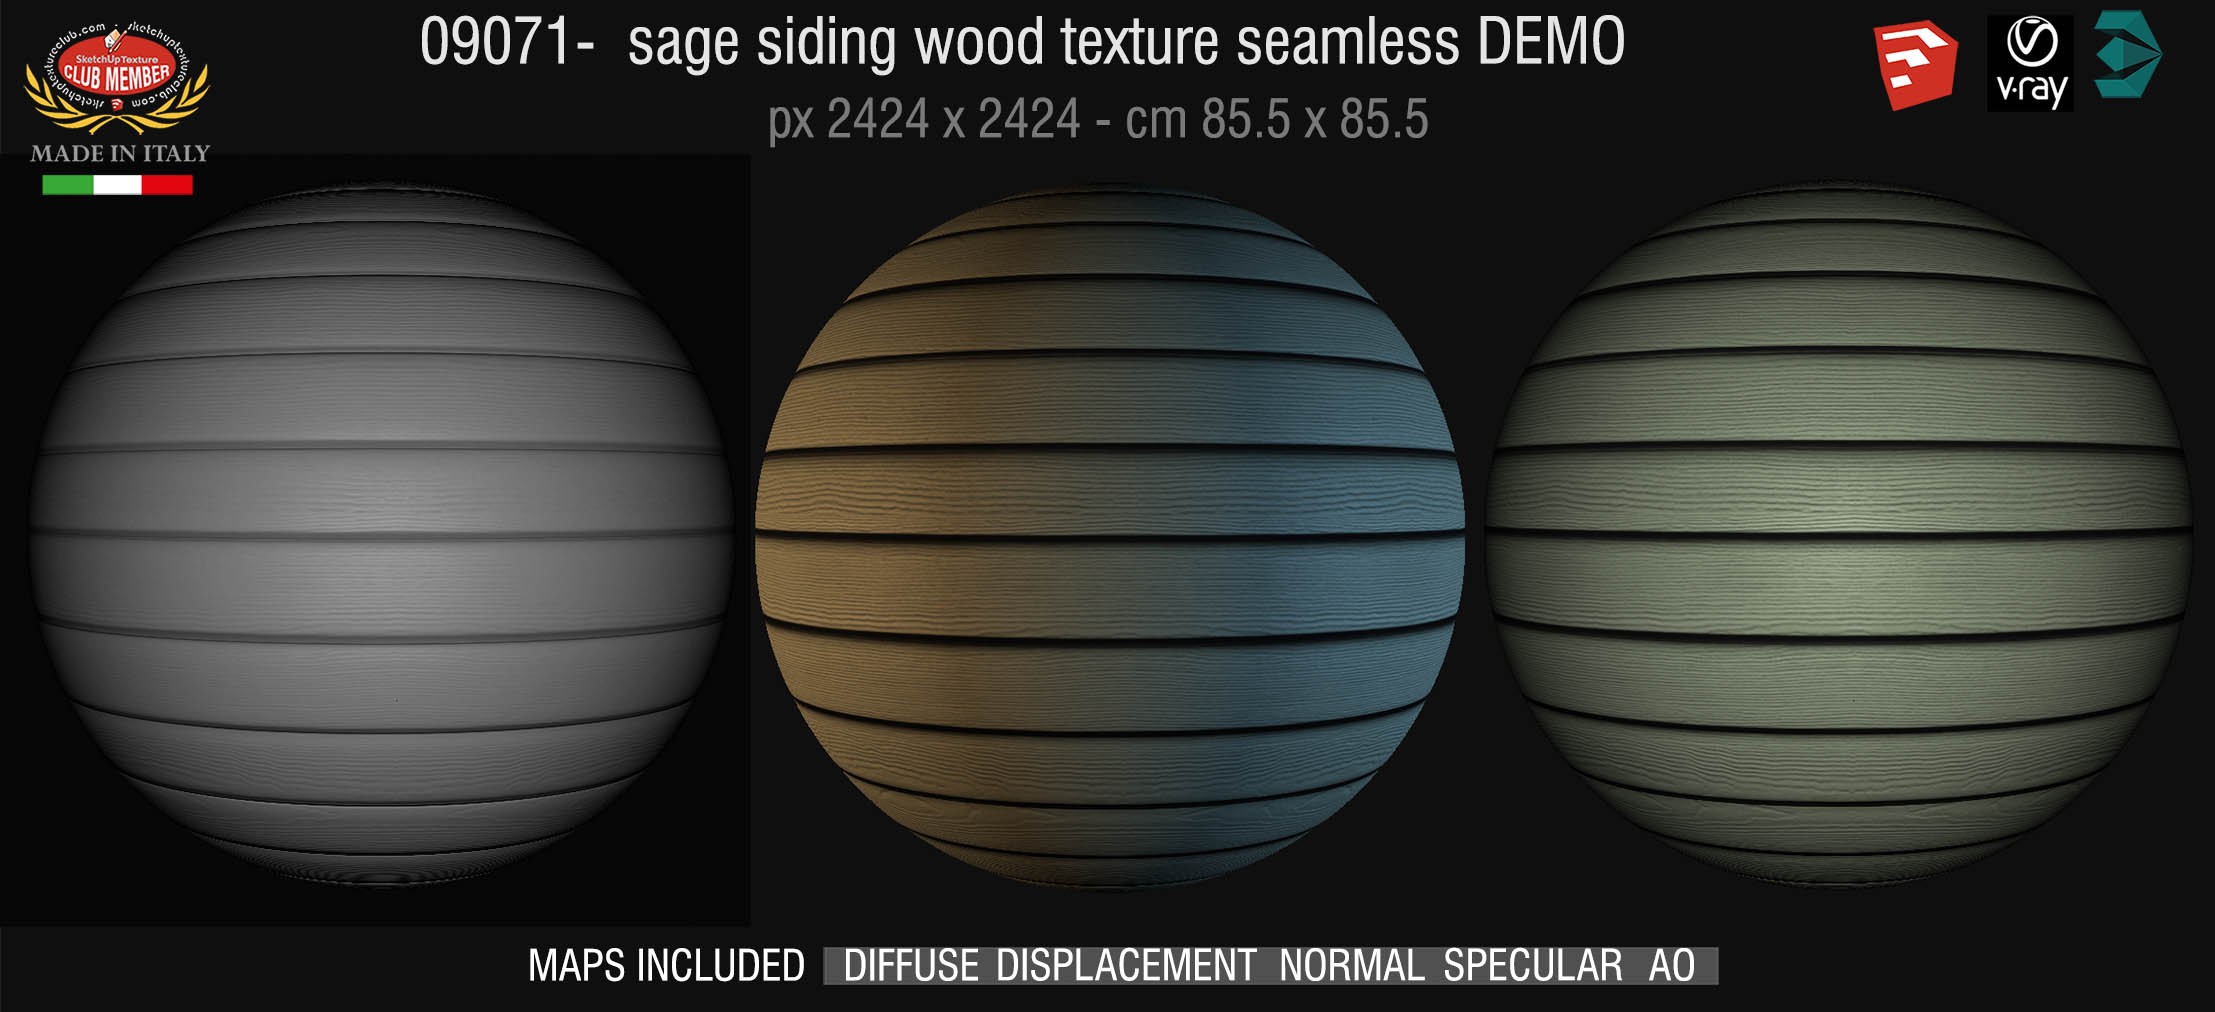 09071 HR Sage siding wood texture + maps DEMO